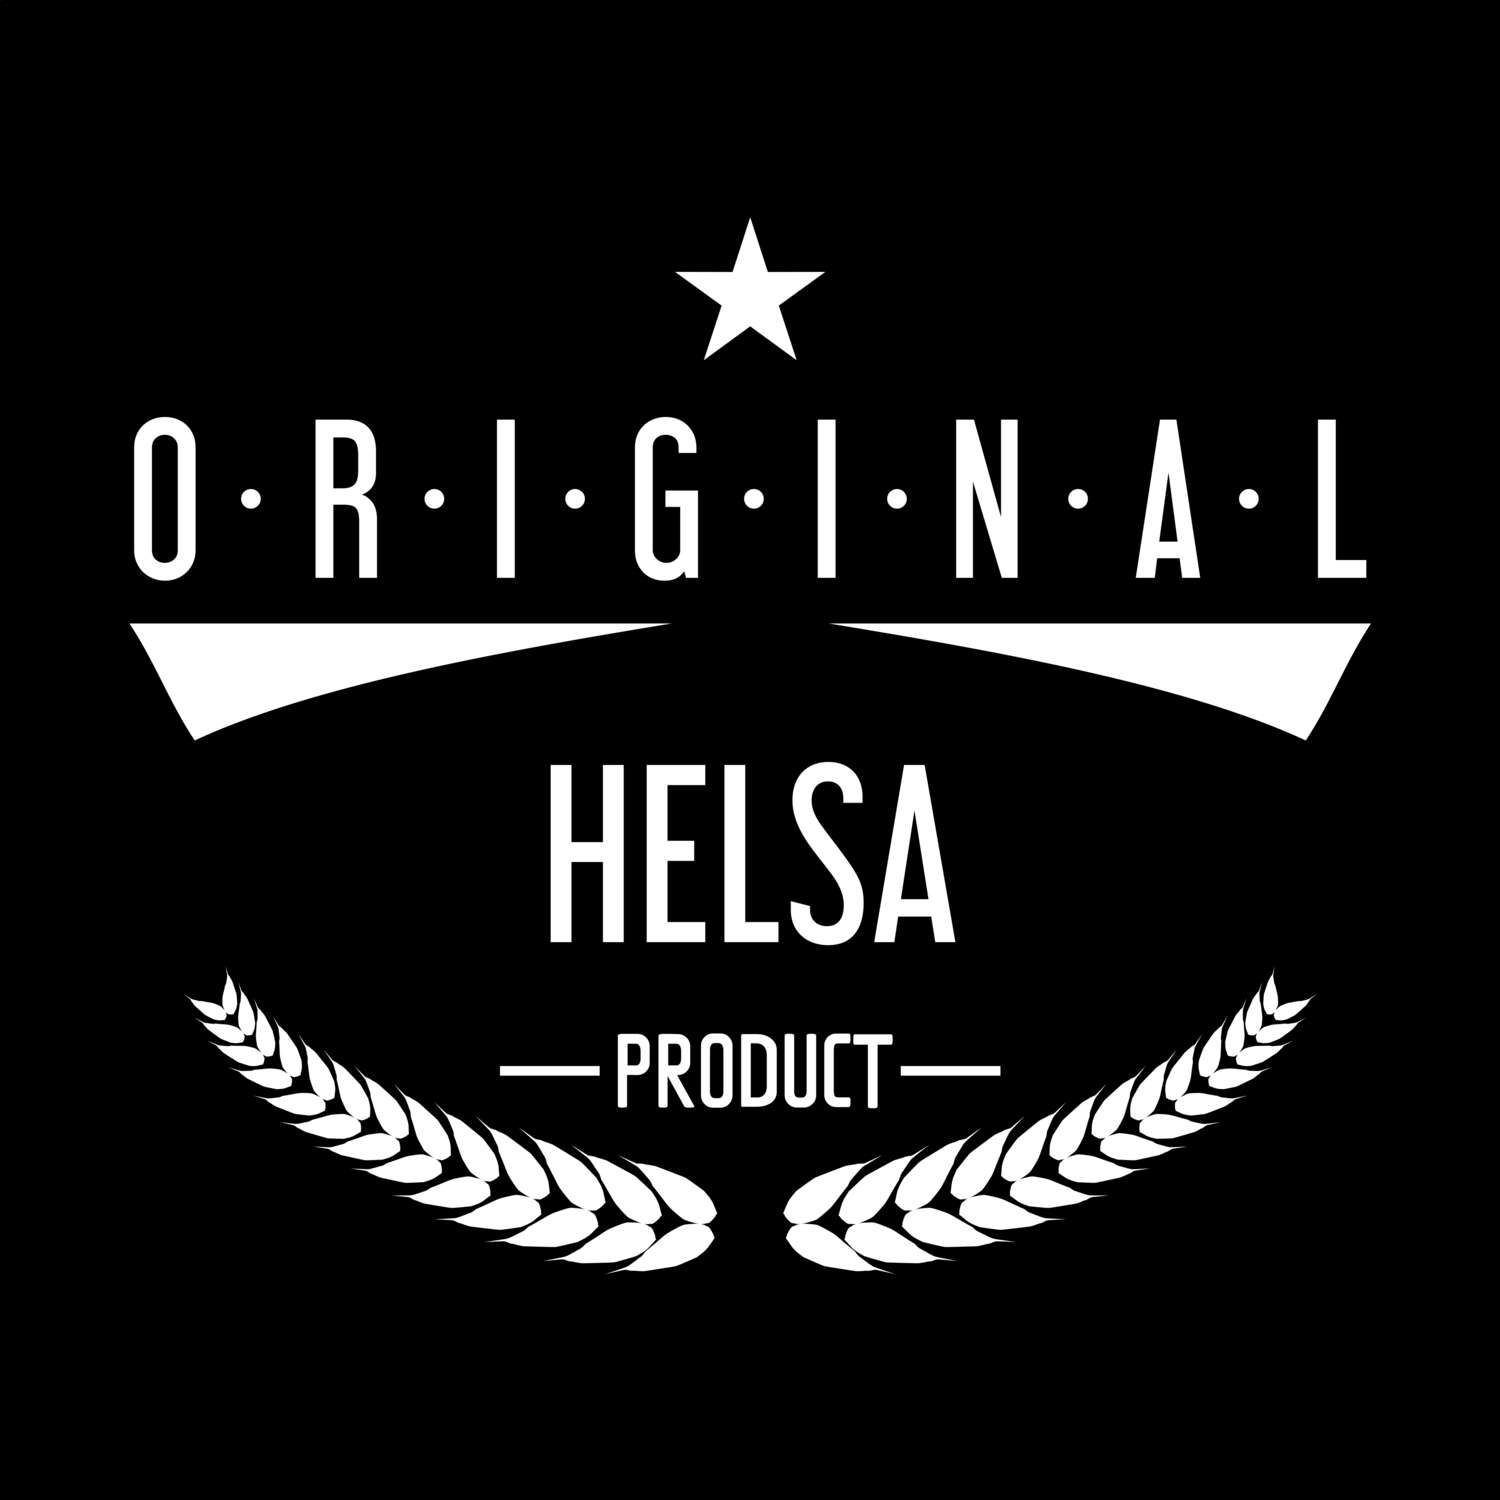 Helsa T-Shirt »Original Product«